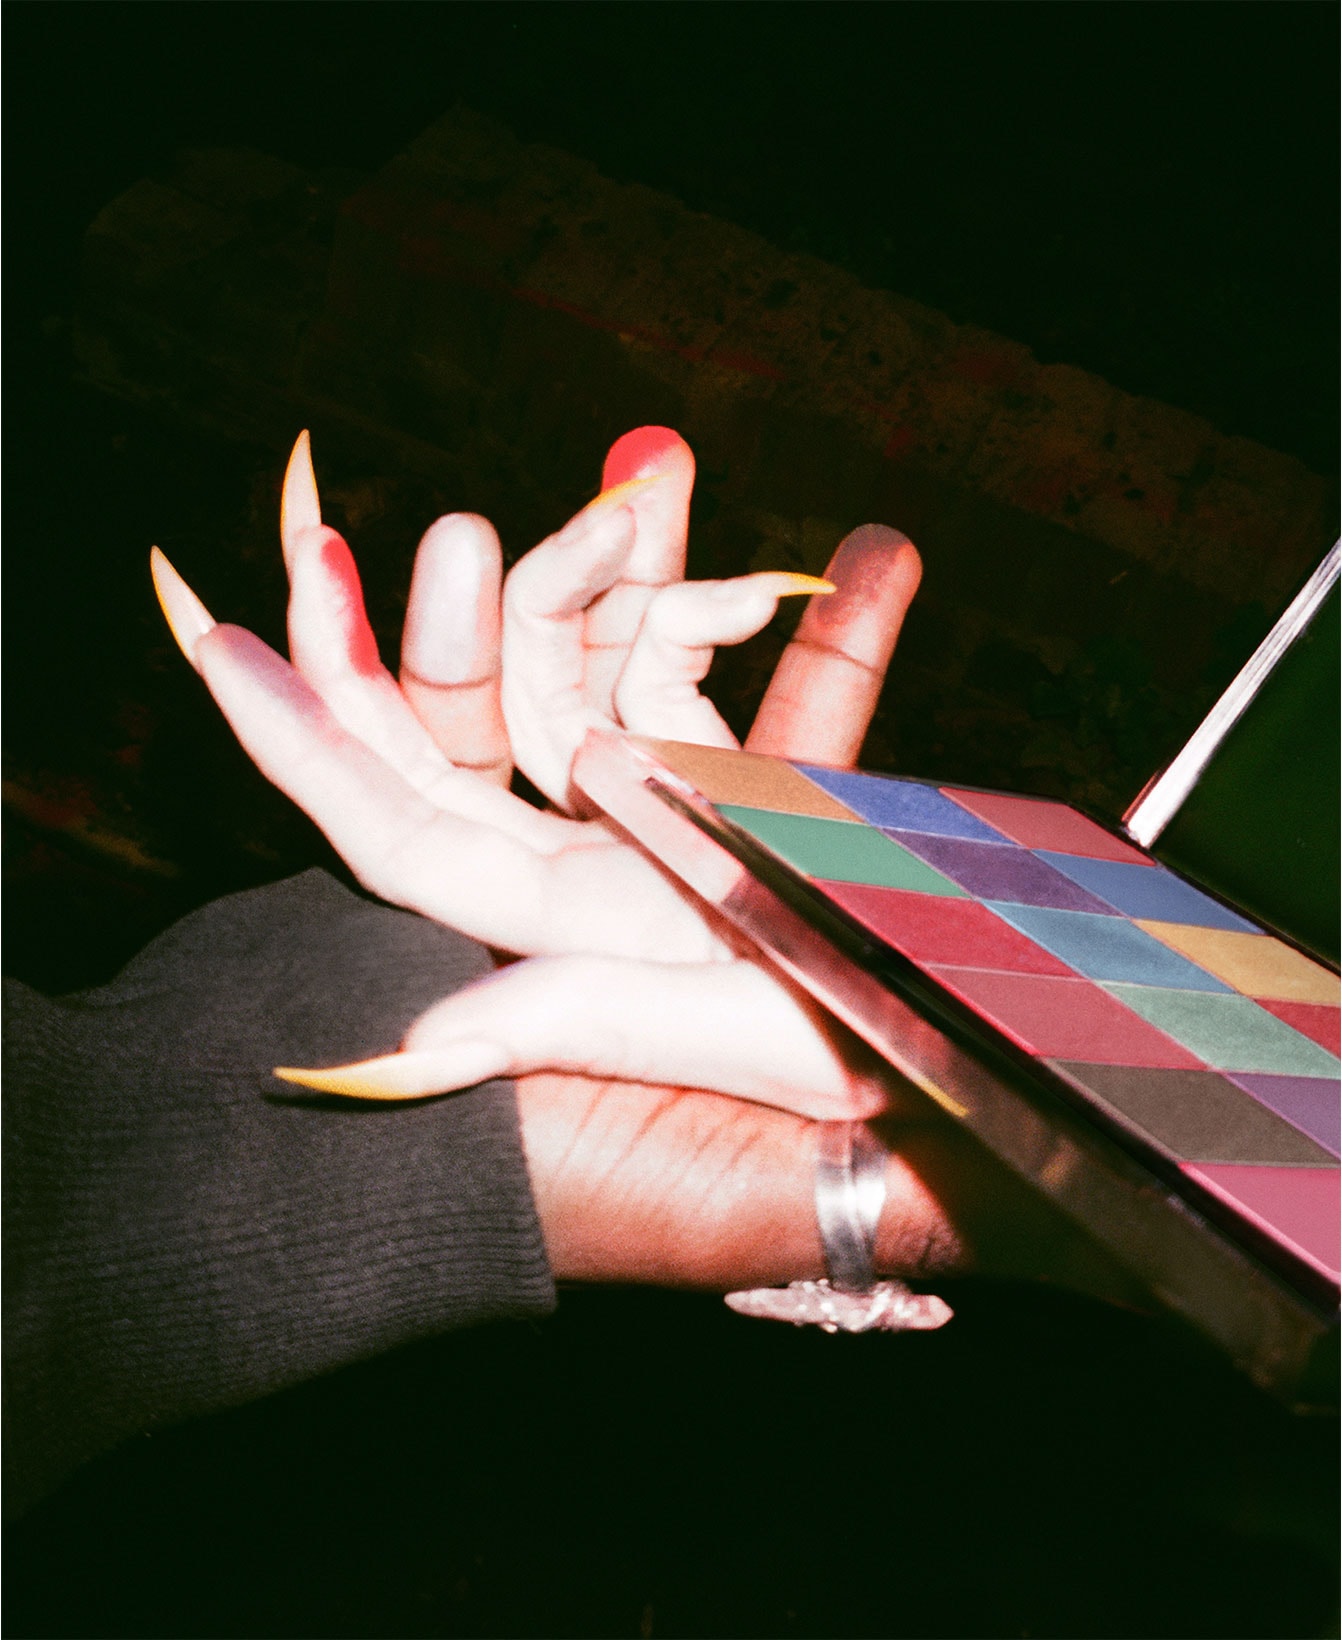 byredo prismic eyeshadow palette 18 colors fingers hands